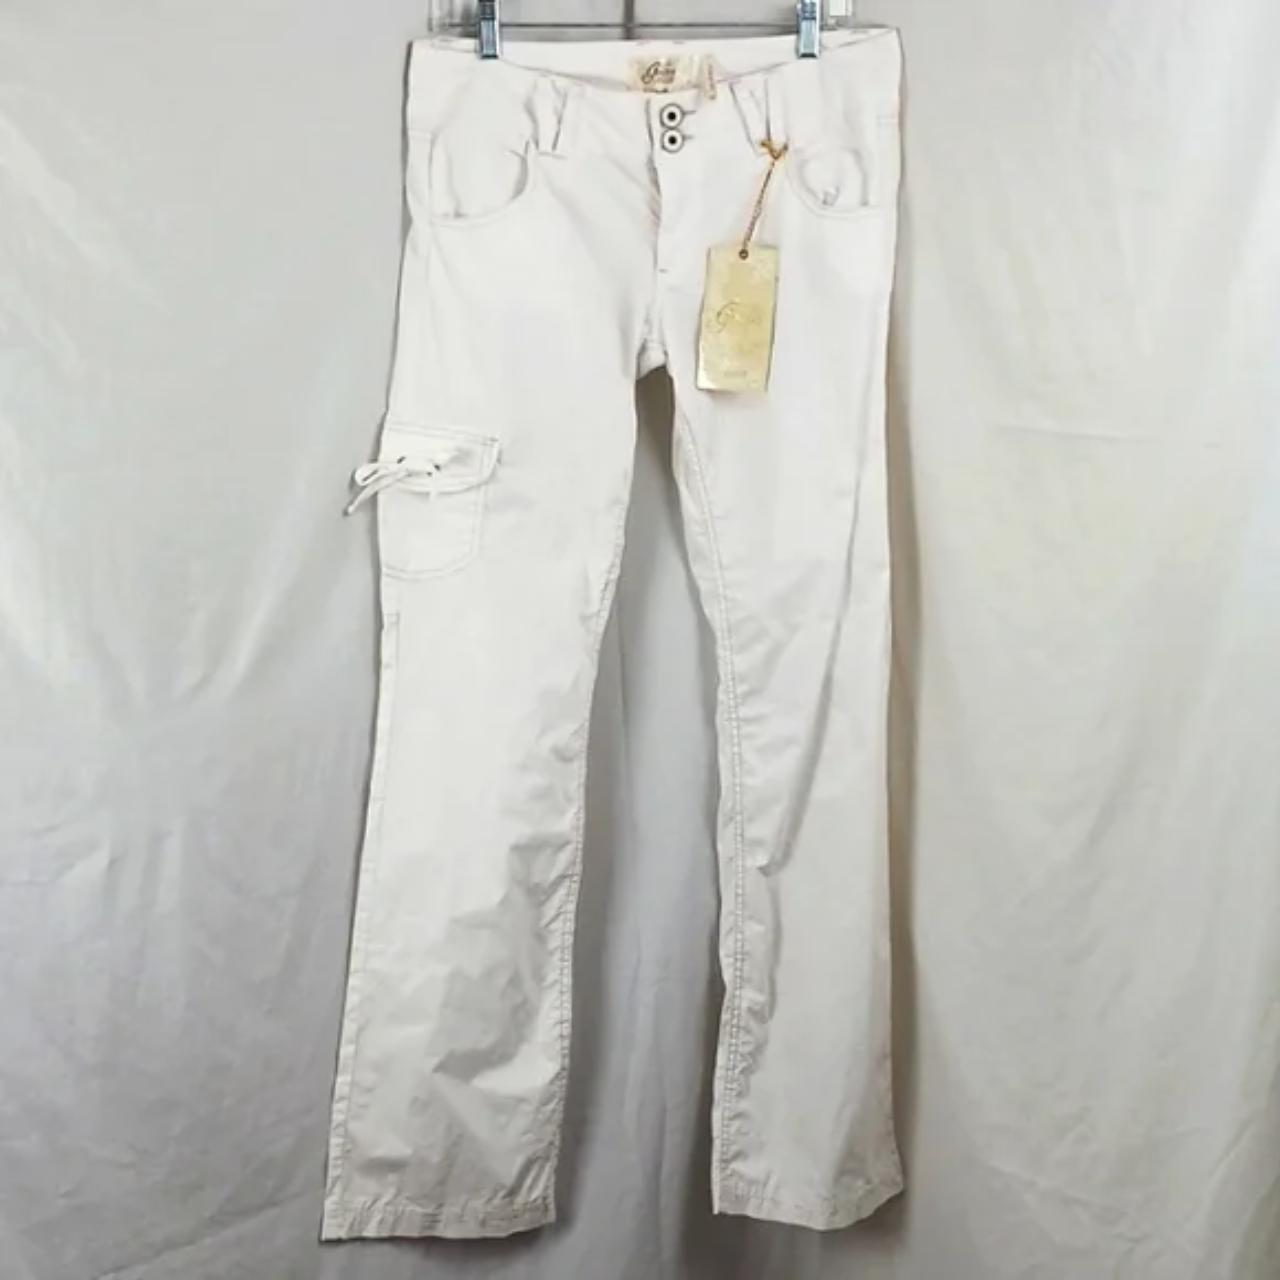 resident Massage En del New Guess Jeans White Women's Pants Stretchy Cargo... - Depop